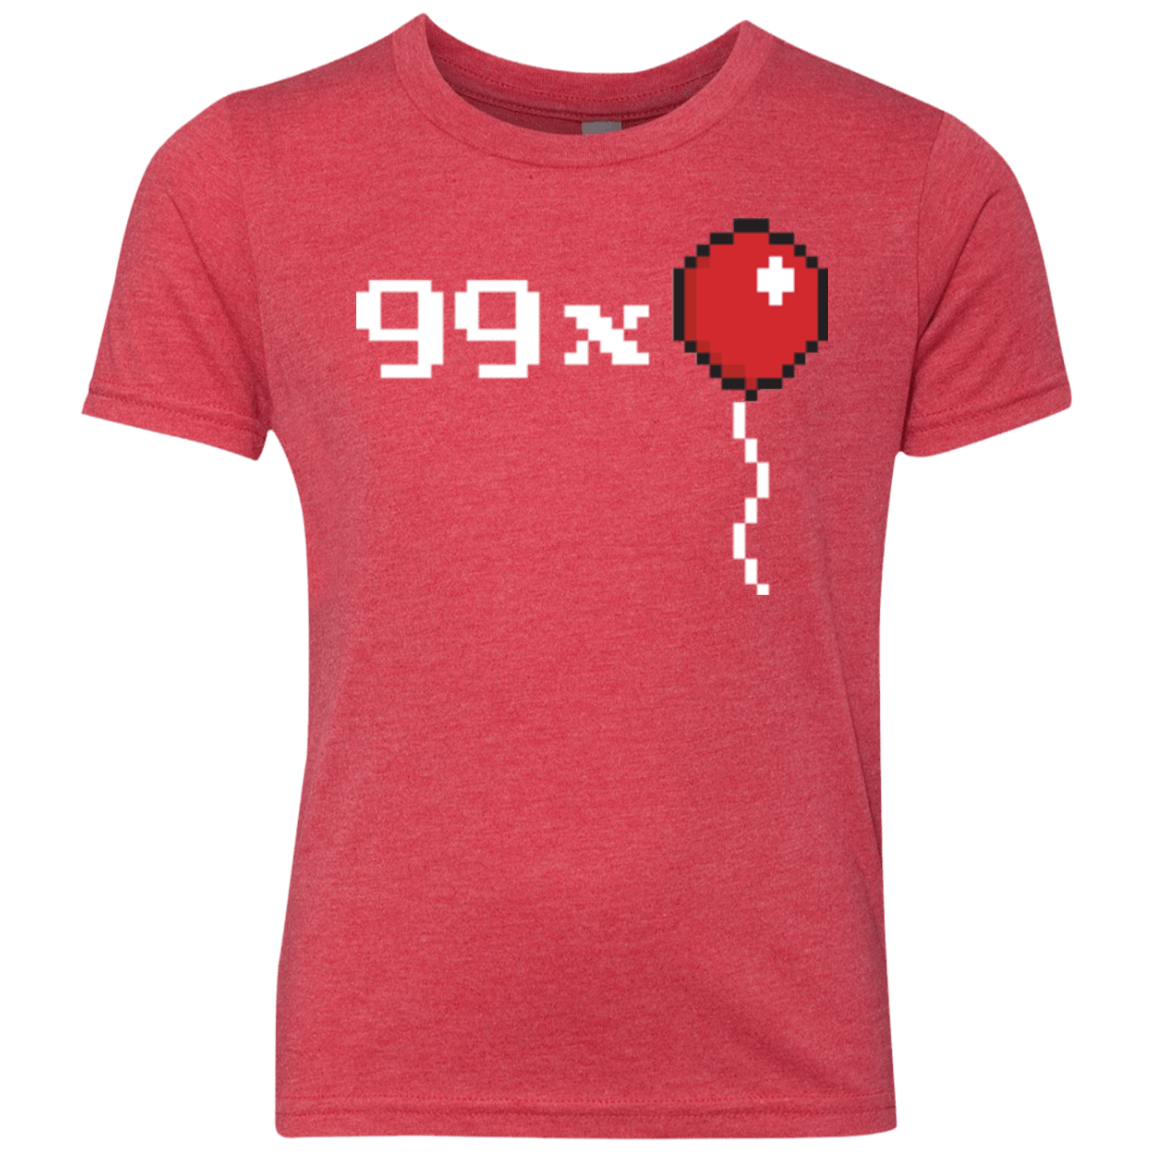 T-Shirts Vintage Red / YXS 99x Balloon Youth Triblend T-Shirt